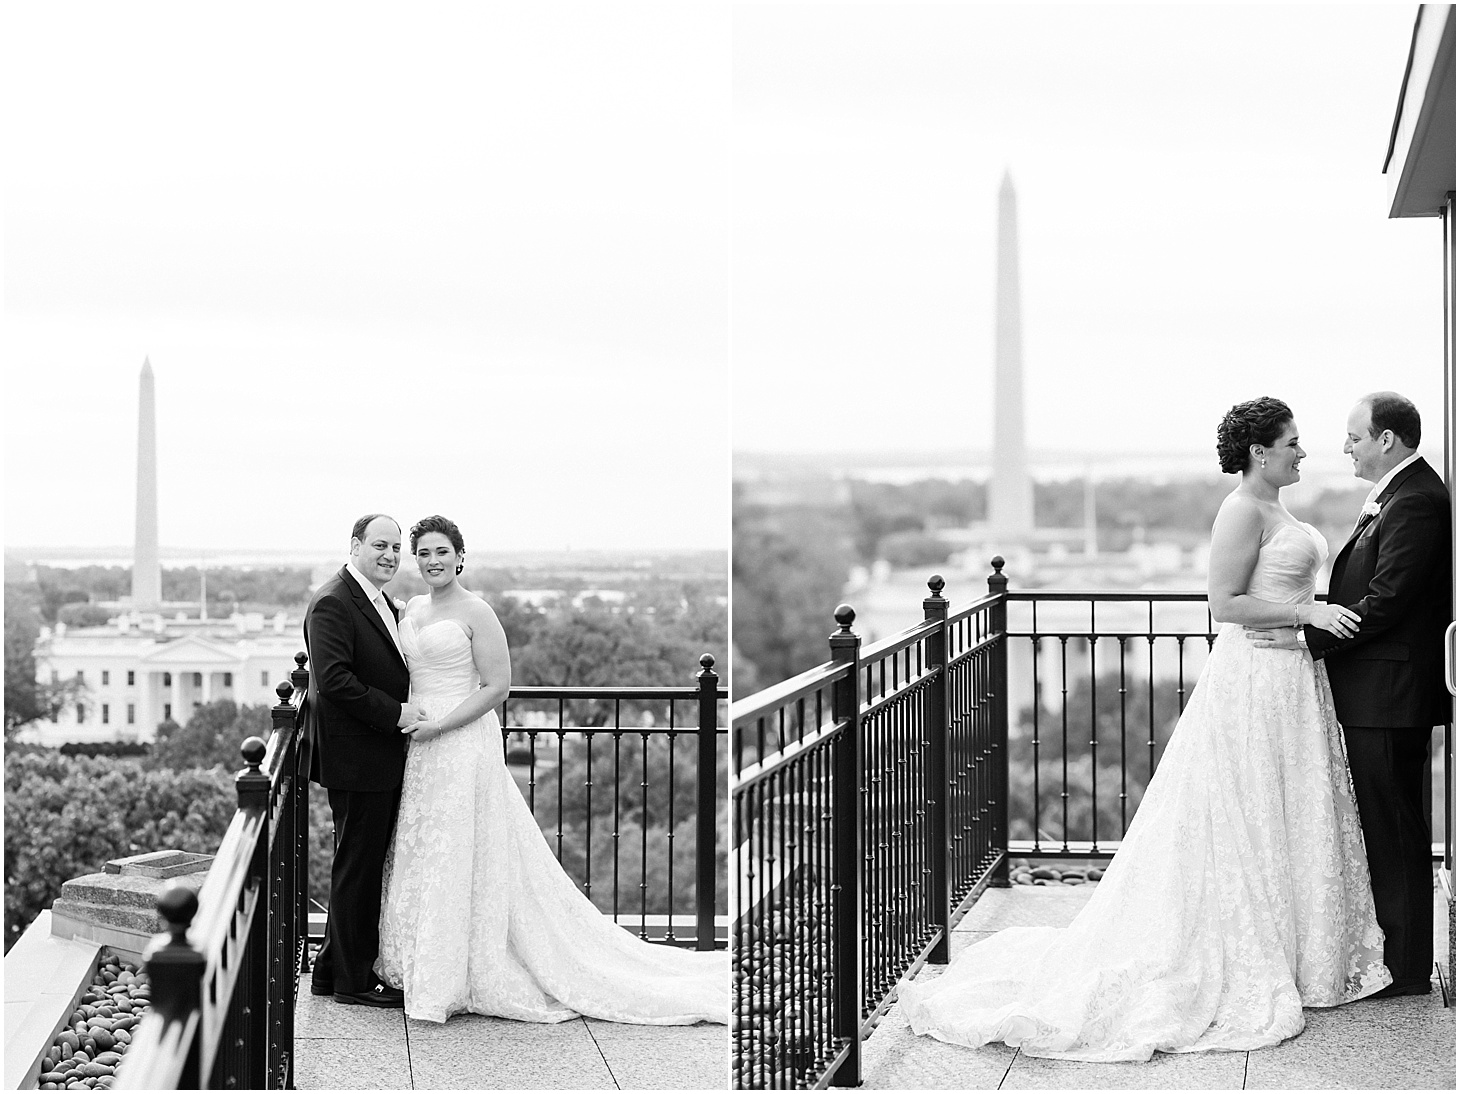 Wedding Portraits on the rooftop of the Hay-Adams Hotel | Winter Brunch Wedding at Hay-Adams Hotel in DC | Sarah Bradshaw Photography